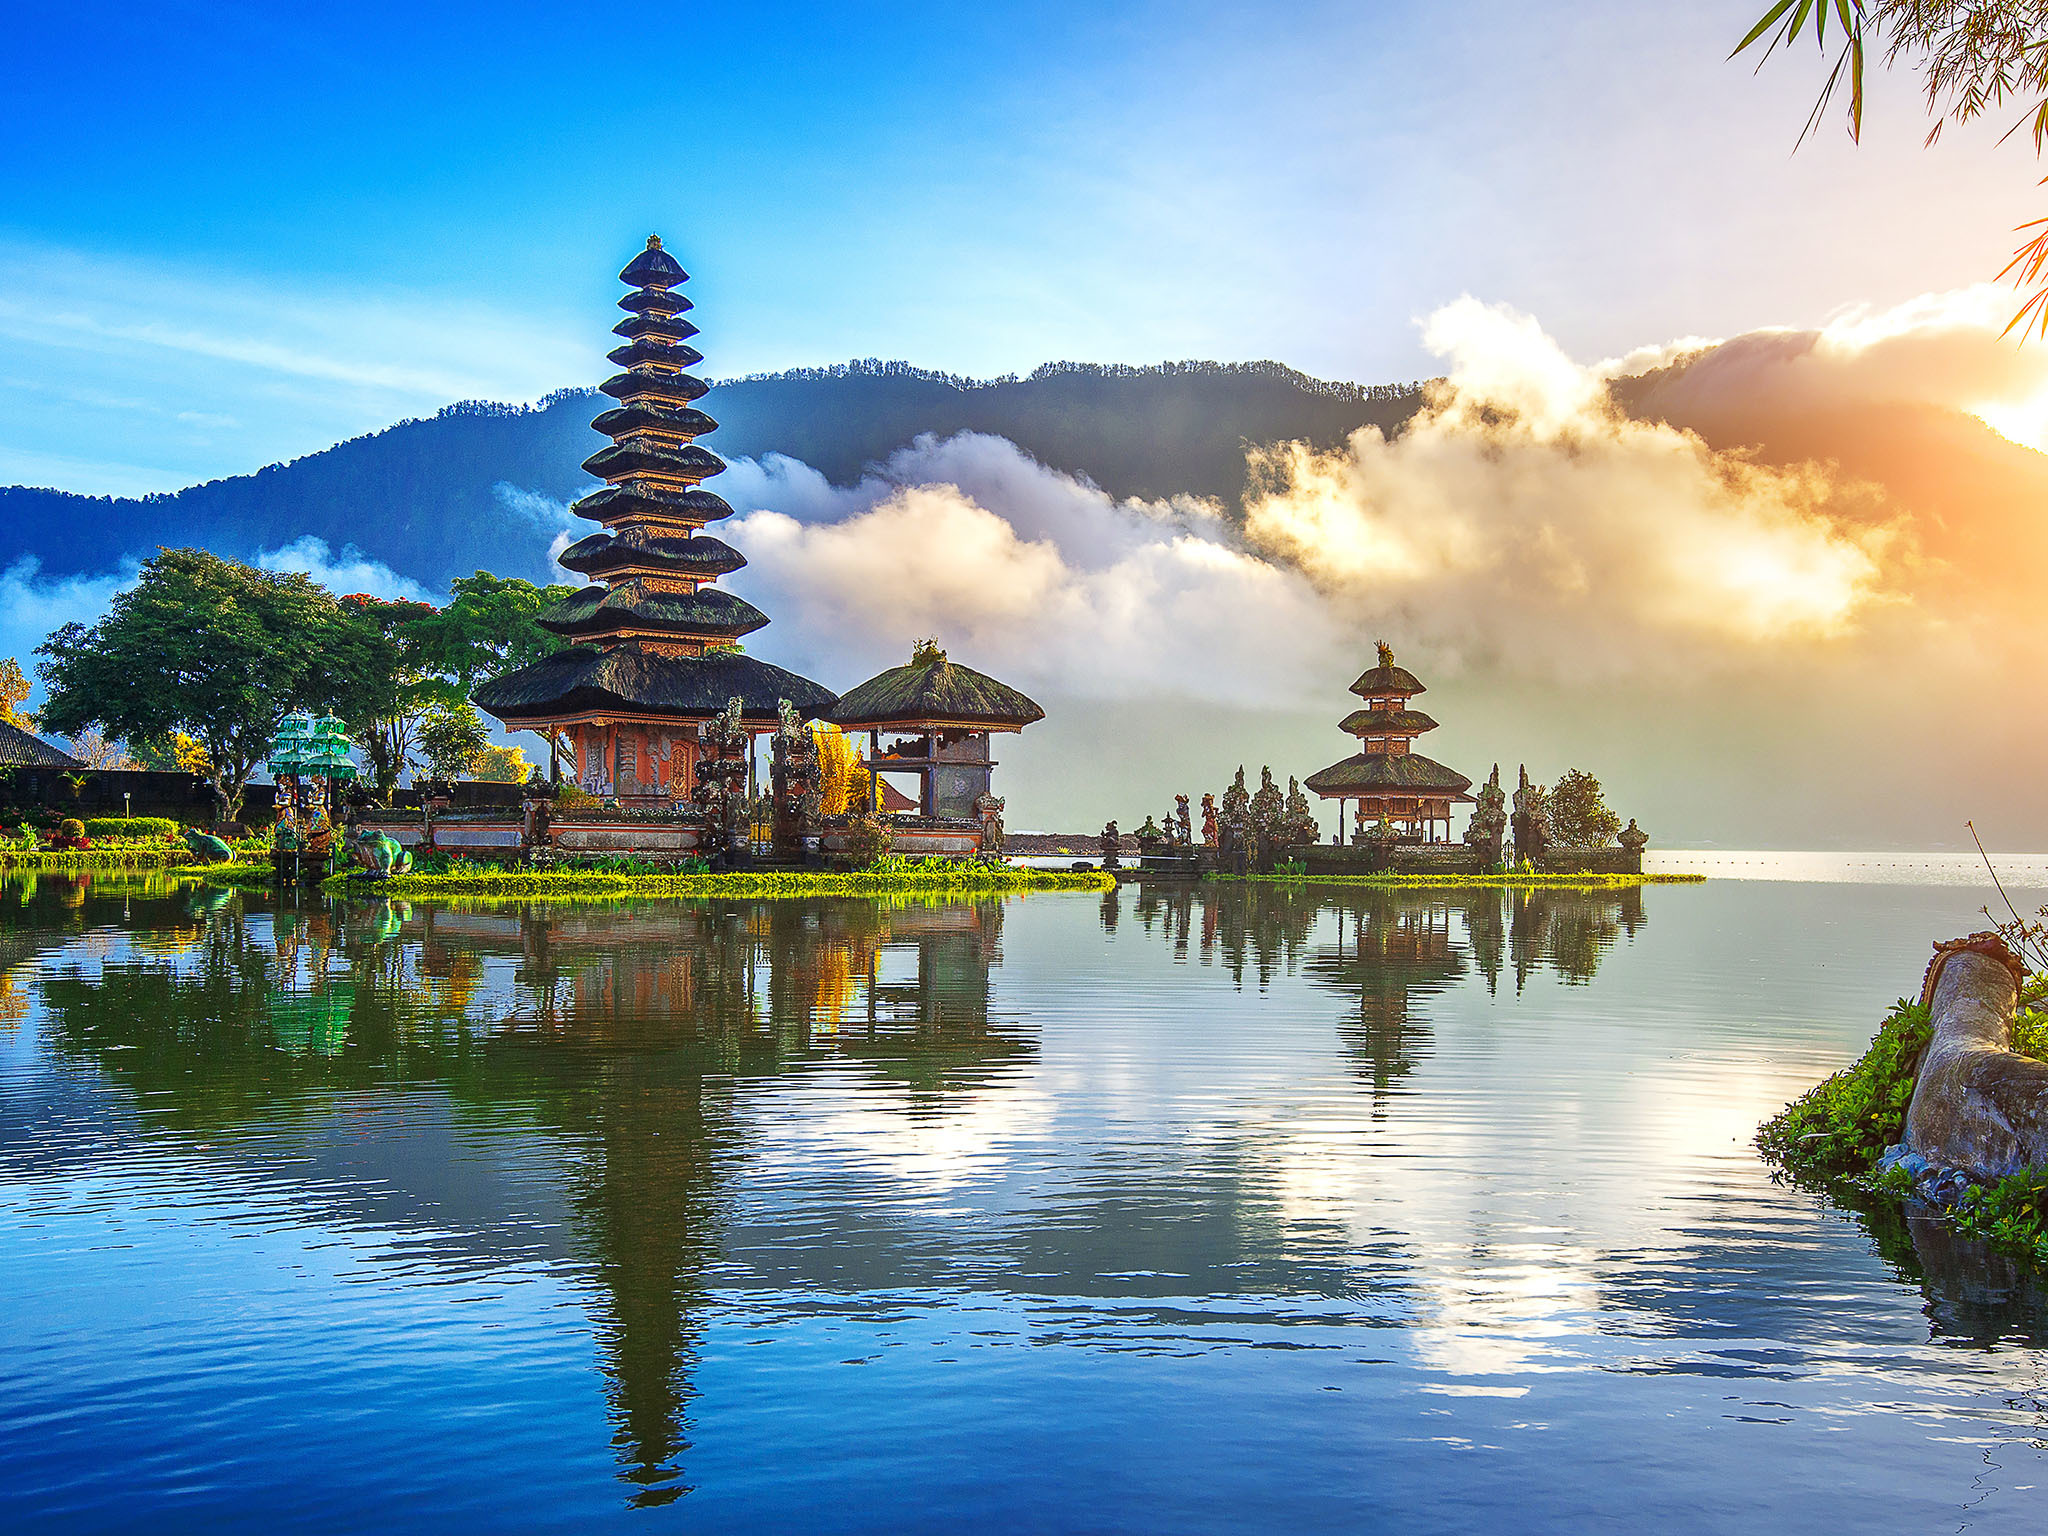 Bali, The Land of god: A travelogue